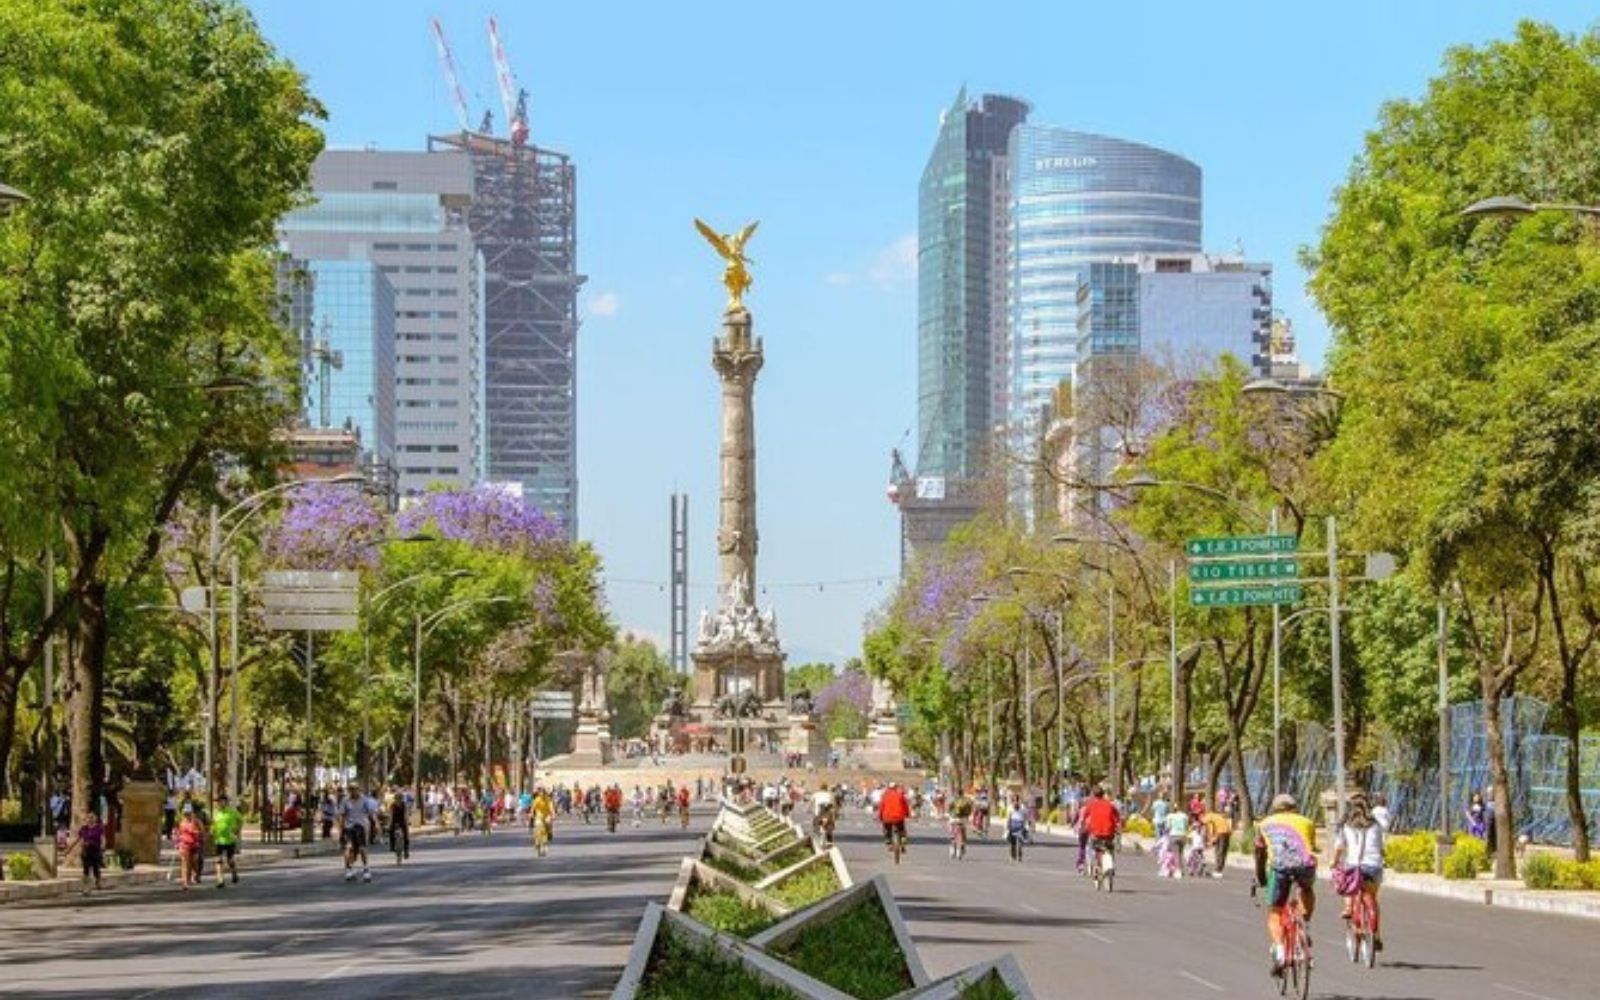 Condo with 2 terraces, jacuzzi, pool, pet zone, for sale Interlomas Mexico City